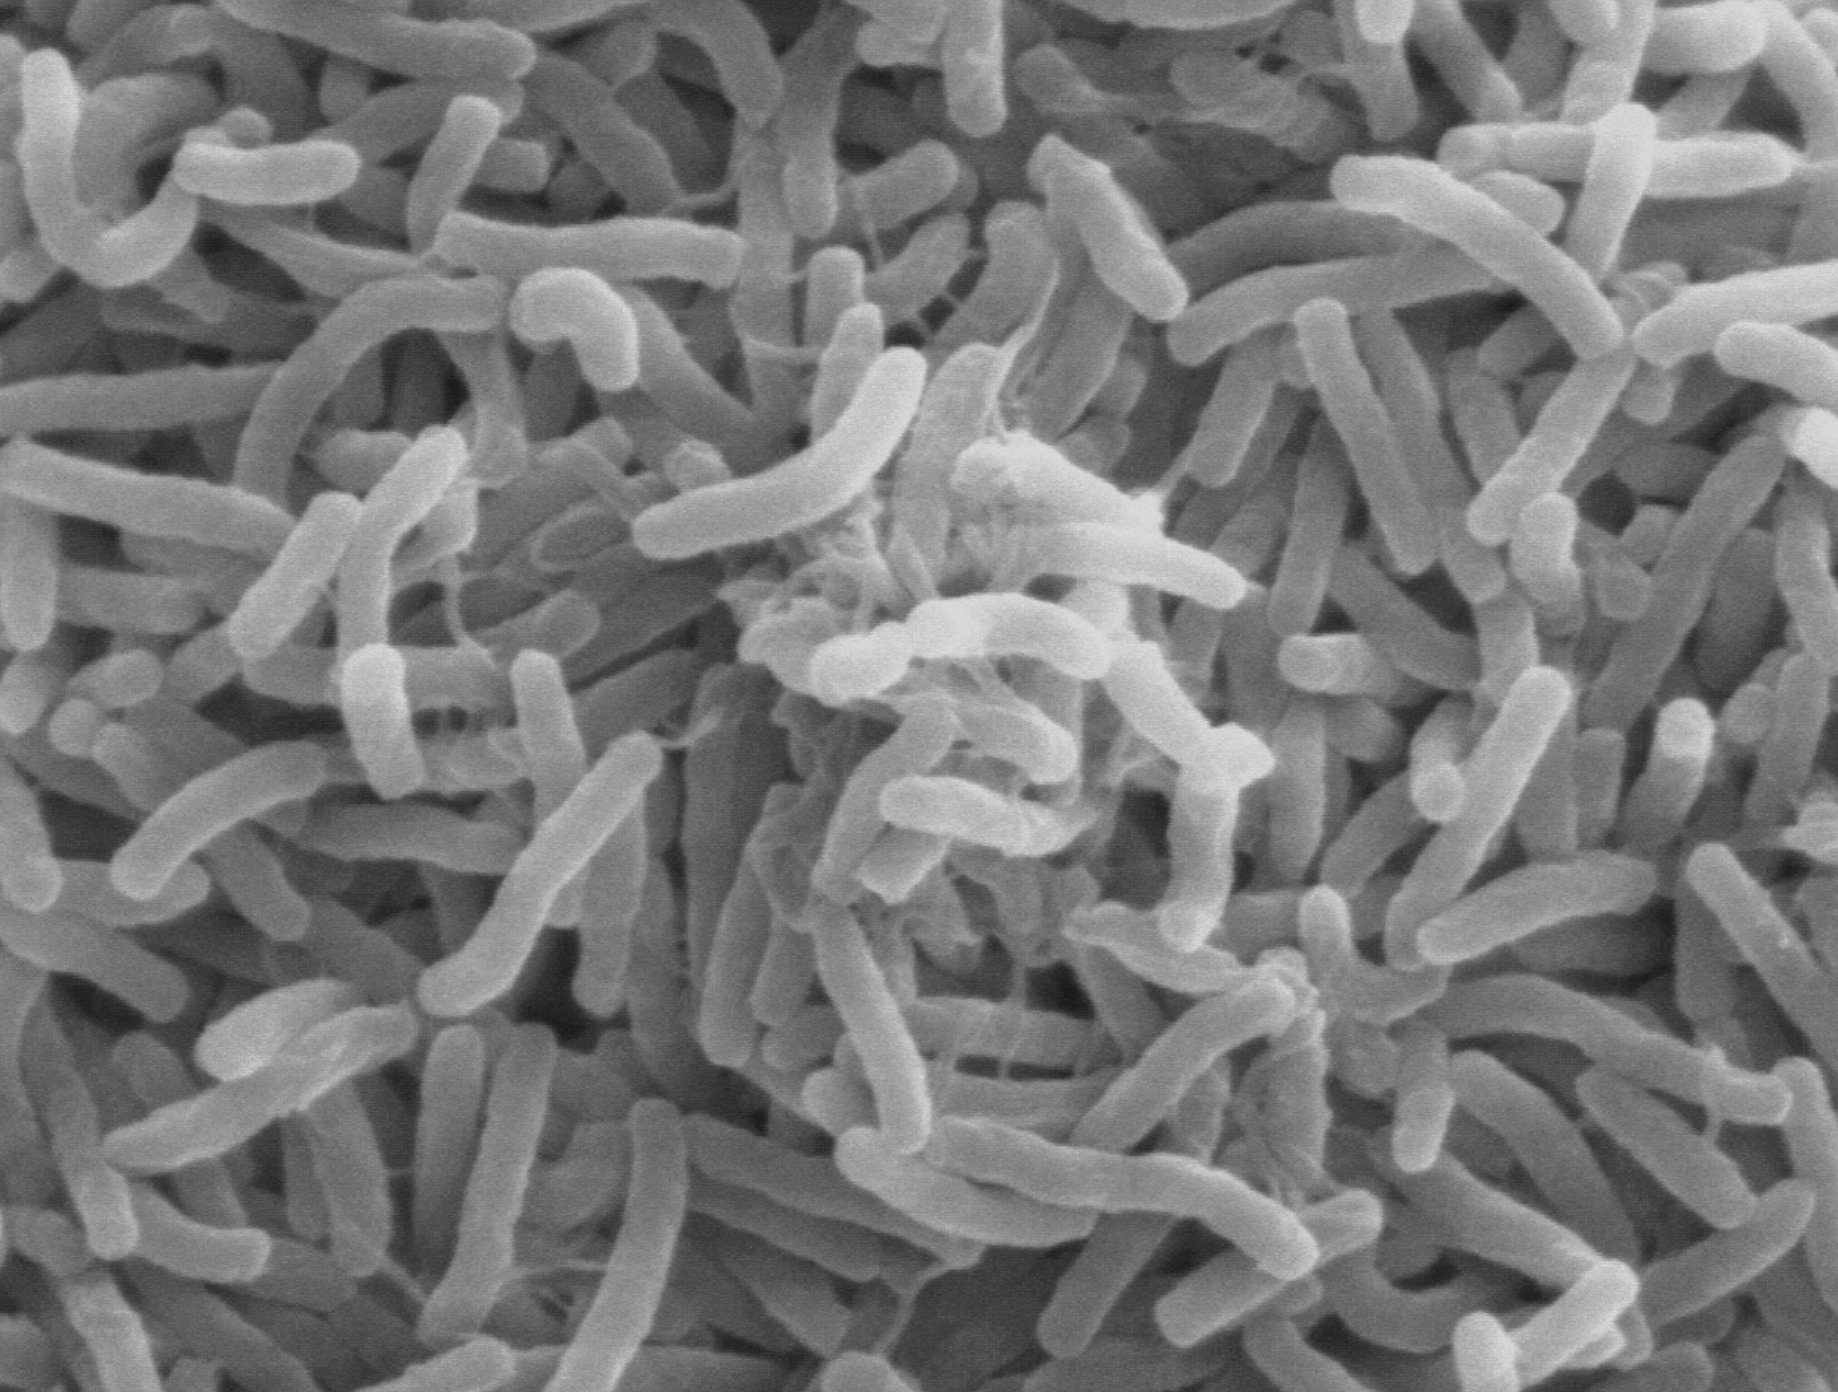 Vibrio cholerae bacteria (Photo Wikimedia Commons)